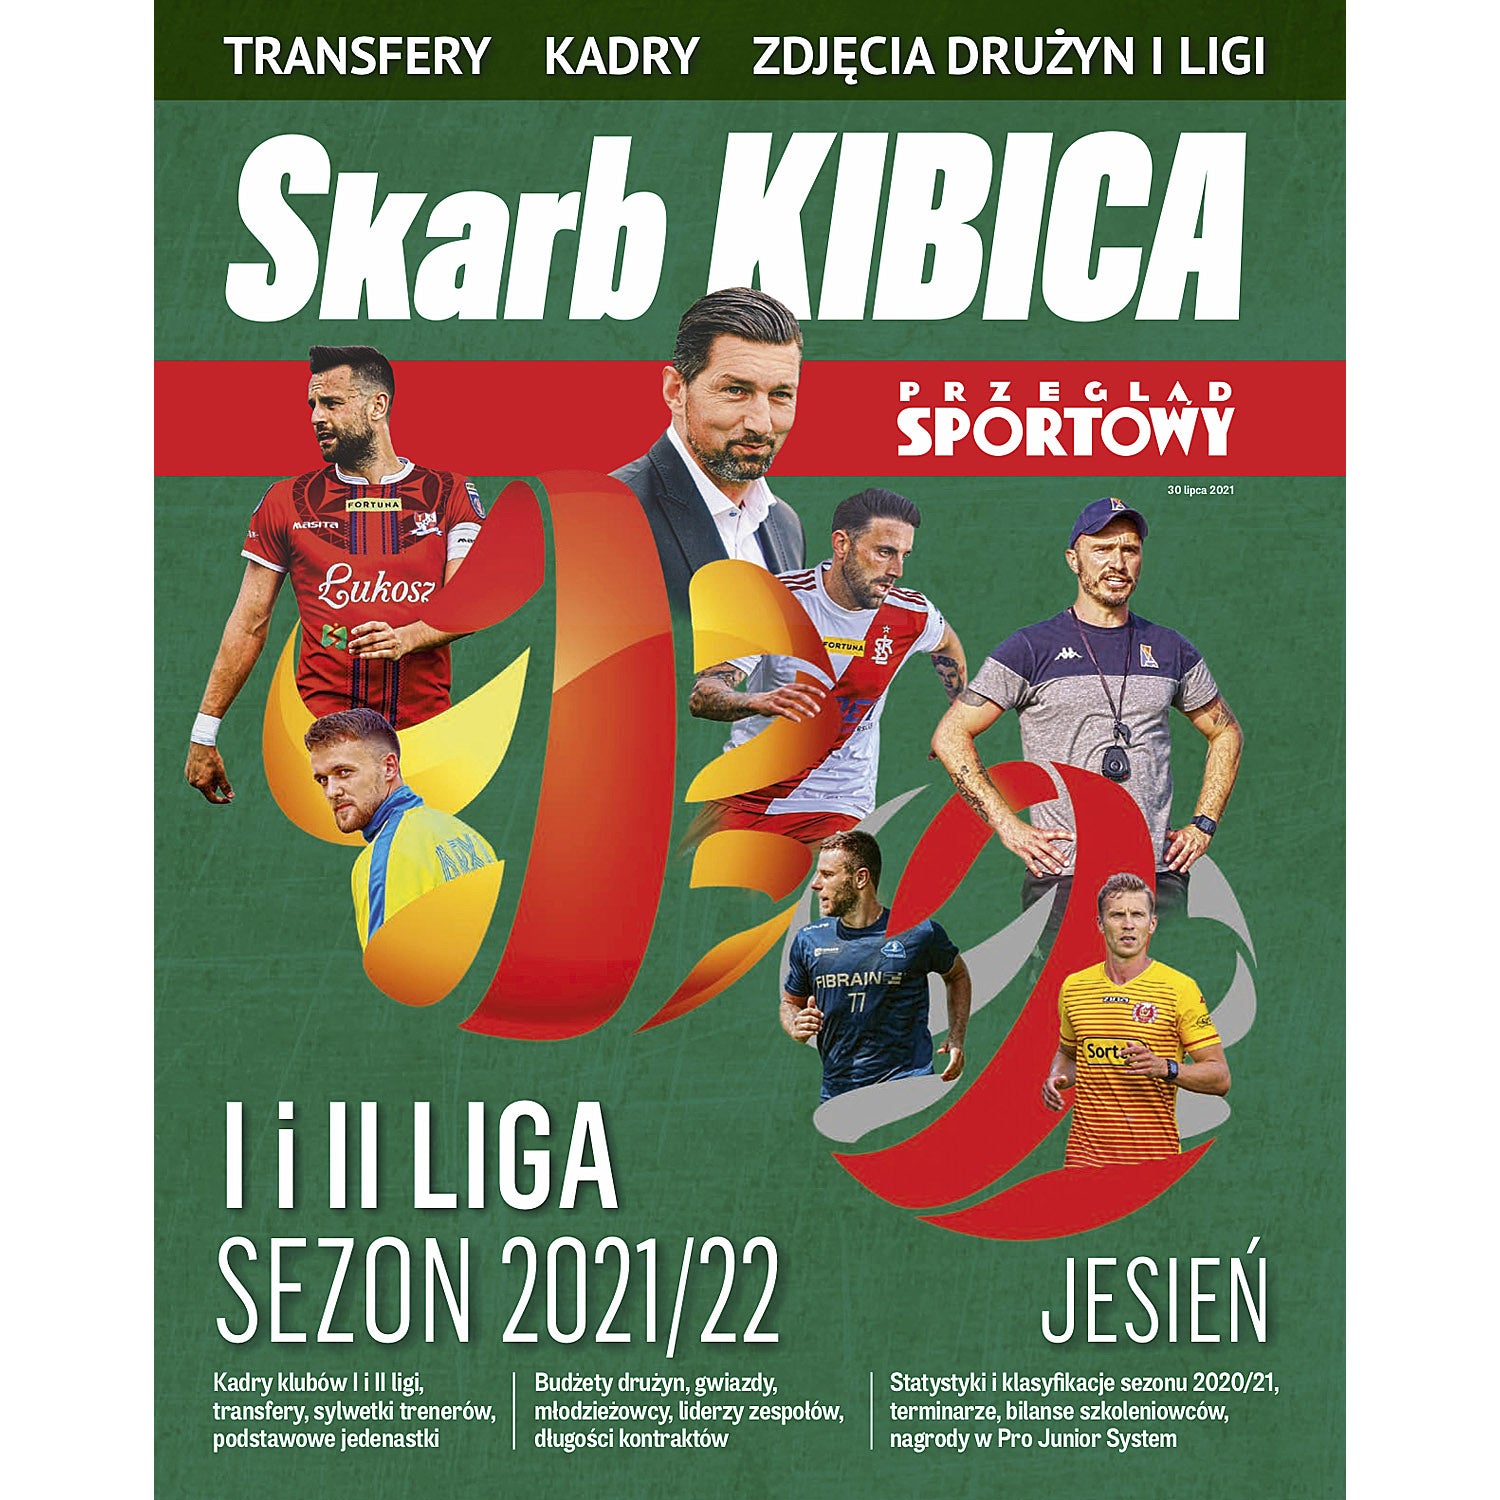 Skarb Kibica I i II Liga Sezon 2021/22 Jesien (Poland Lower Divisions Season Preview)